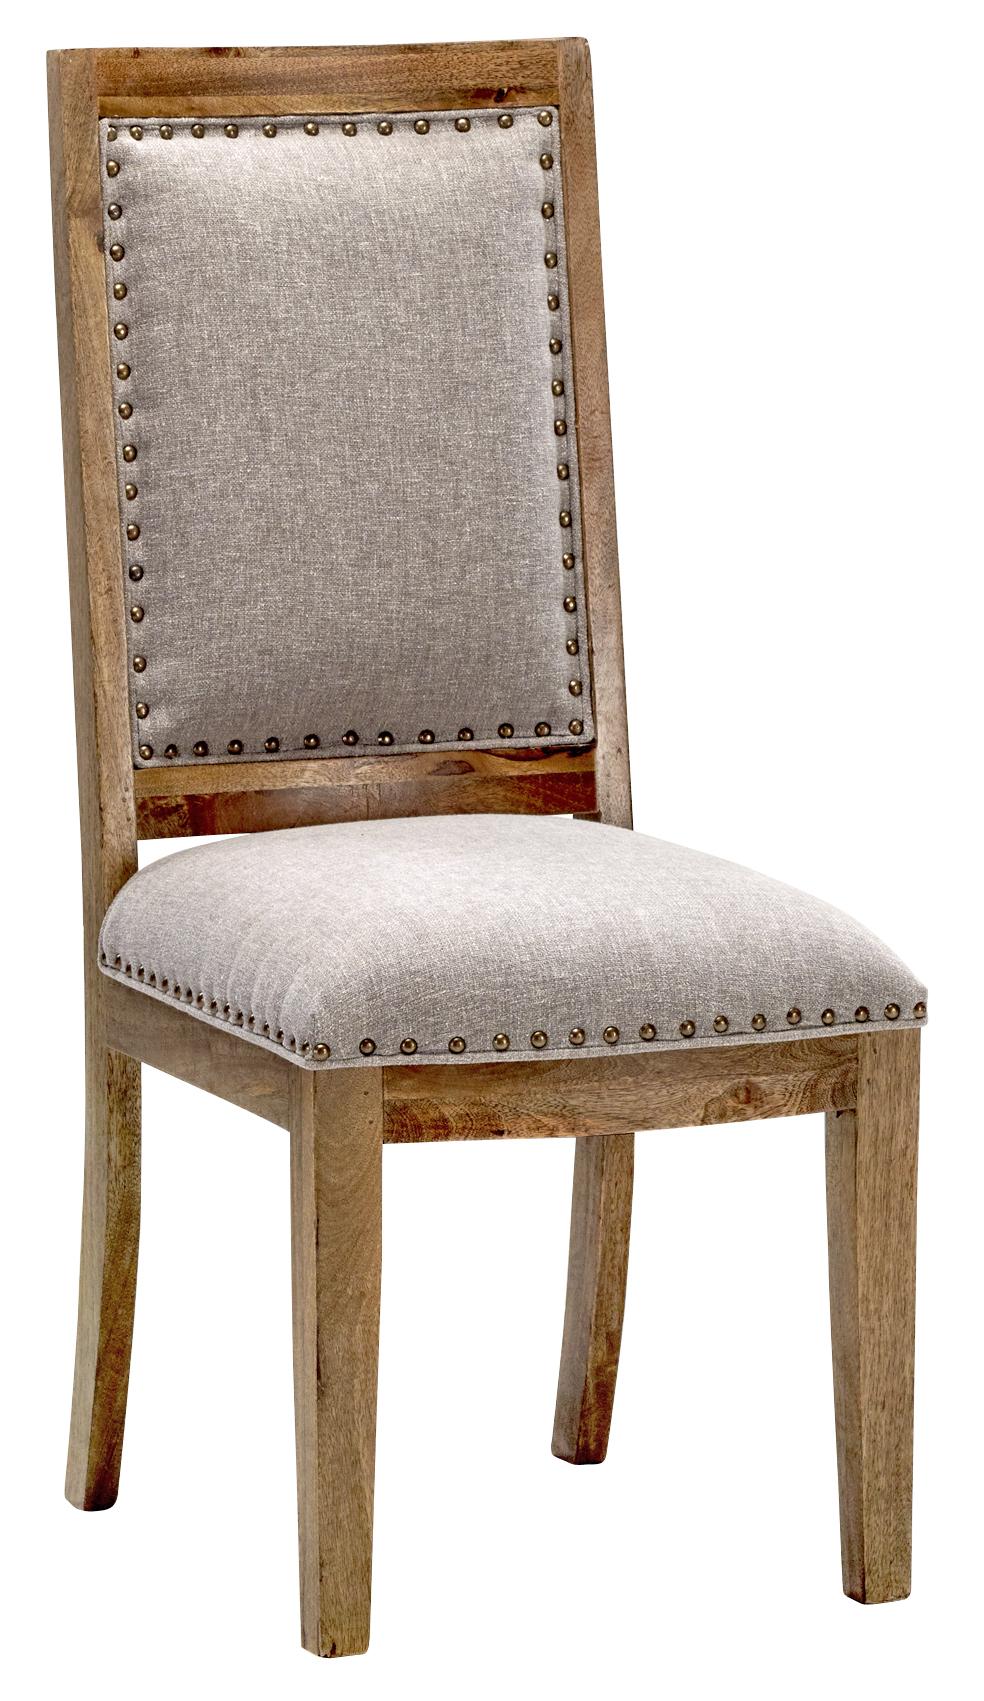 Transitional Side Chair Set ARA-9198 Unwin ARA-9198 in Brown Cotton